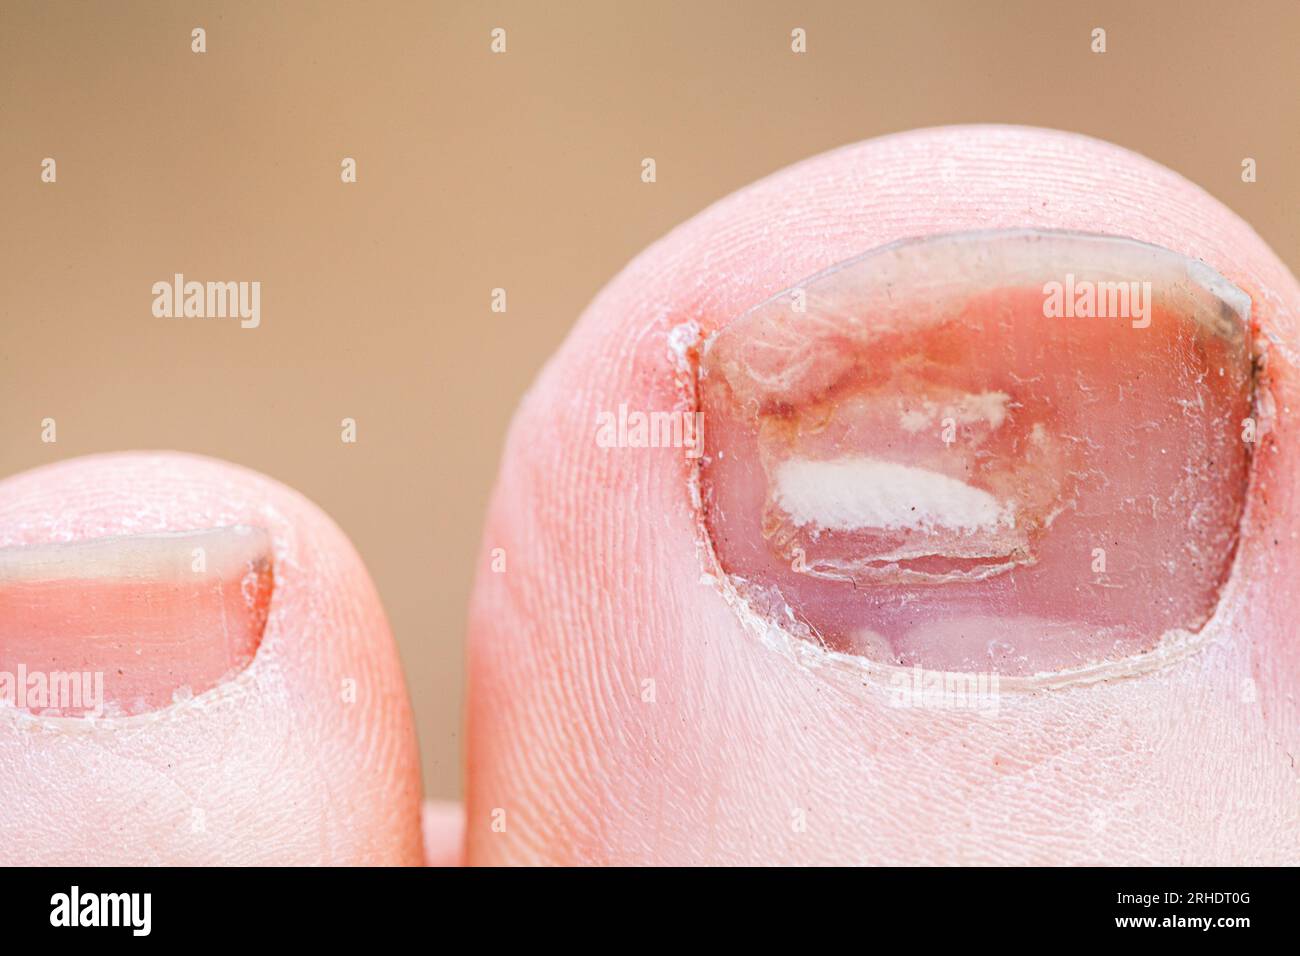 Please help! Badly damaged nails. : r/Nails